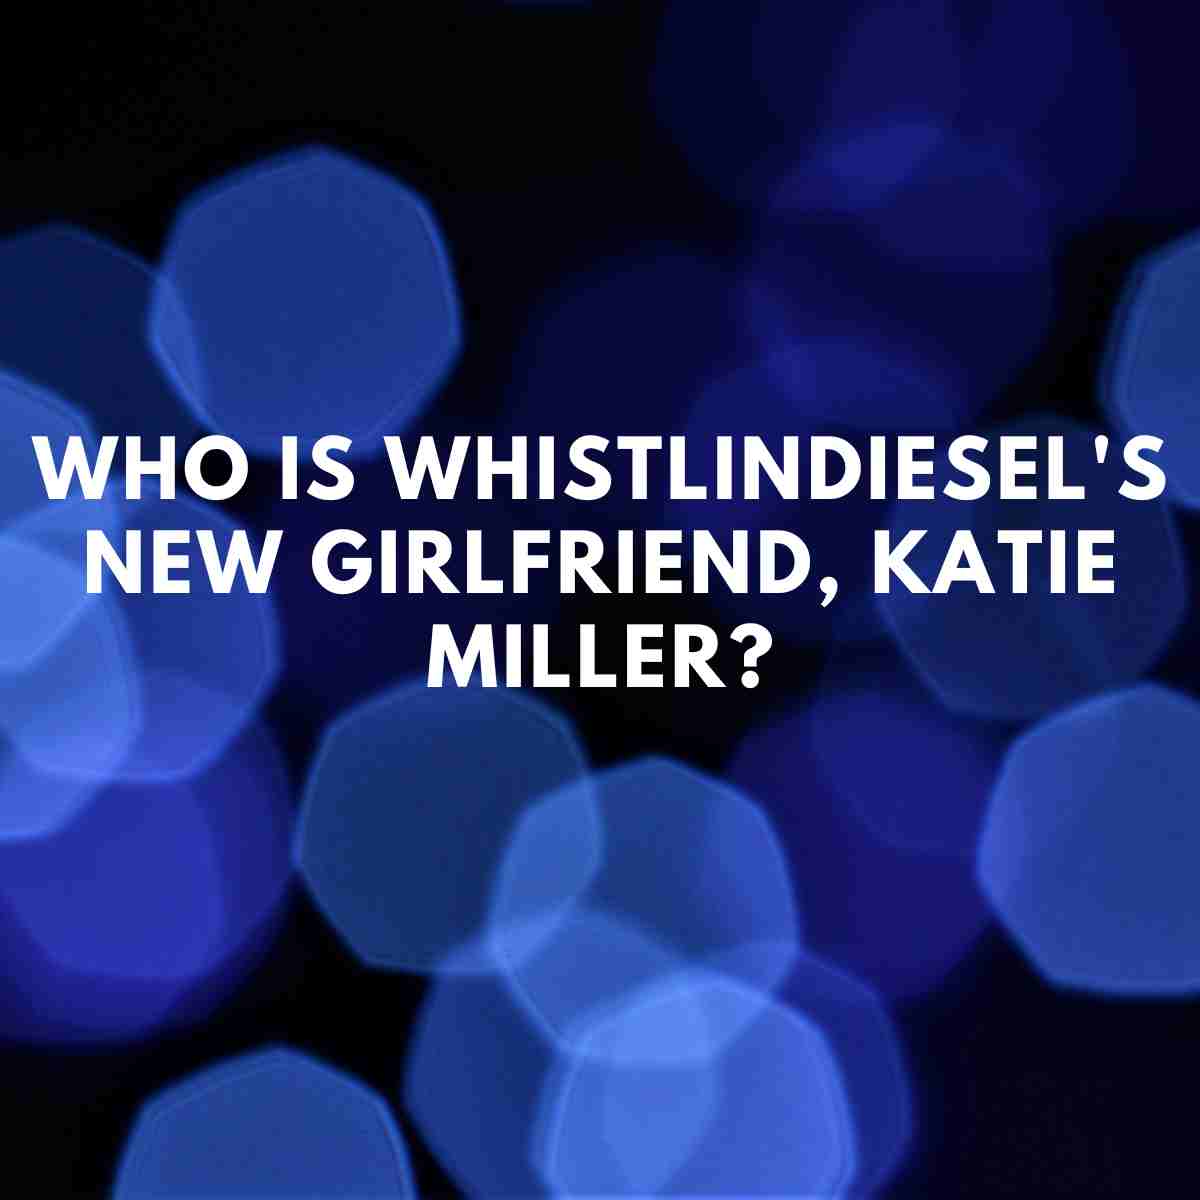 Who is WhistlinDiesel's new girlfriend, Katie Miller